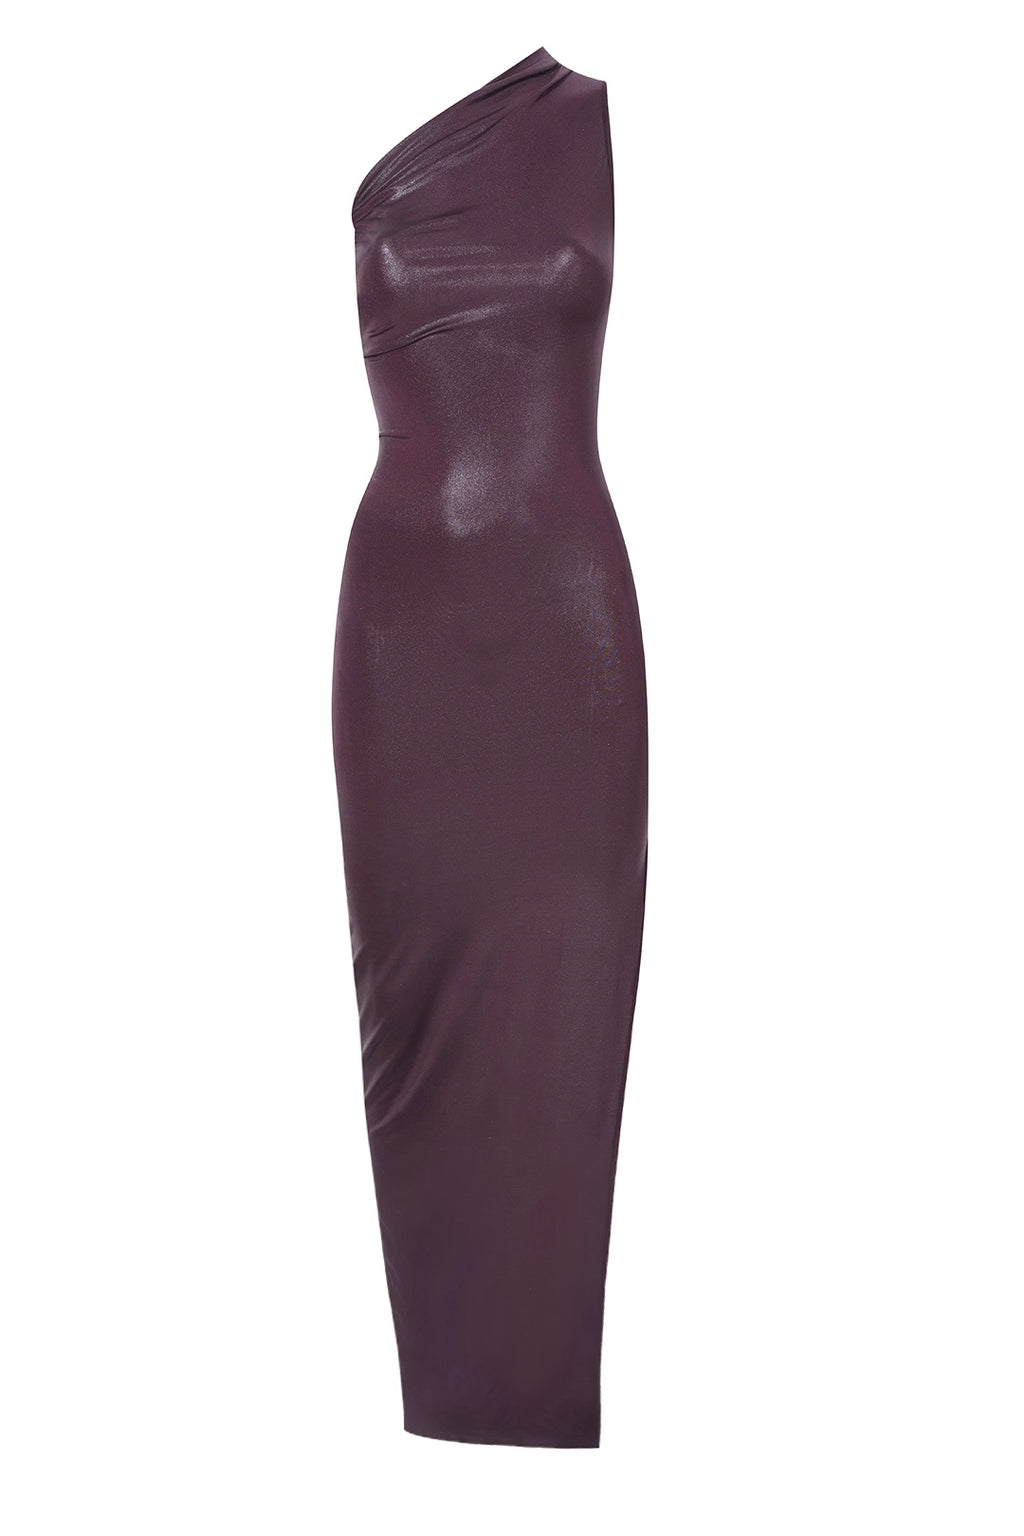 Sivaan Dark Purple Gown